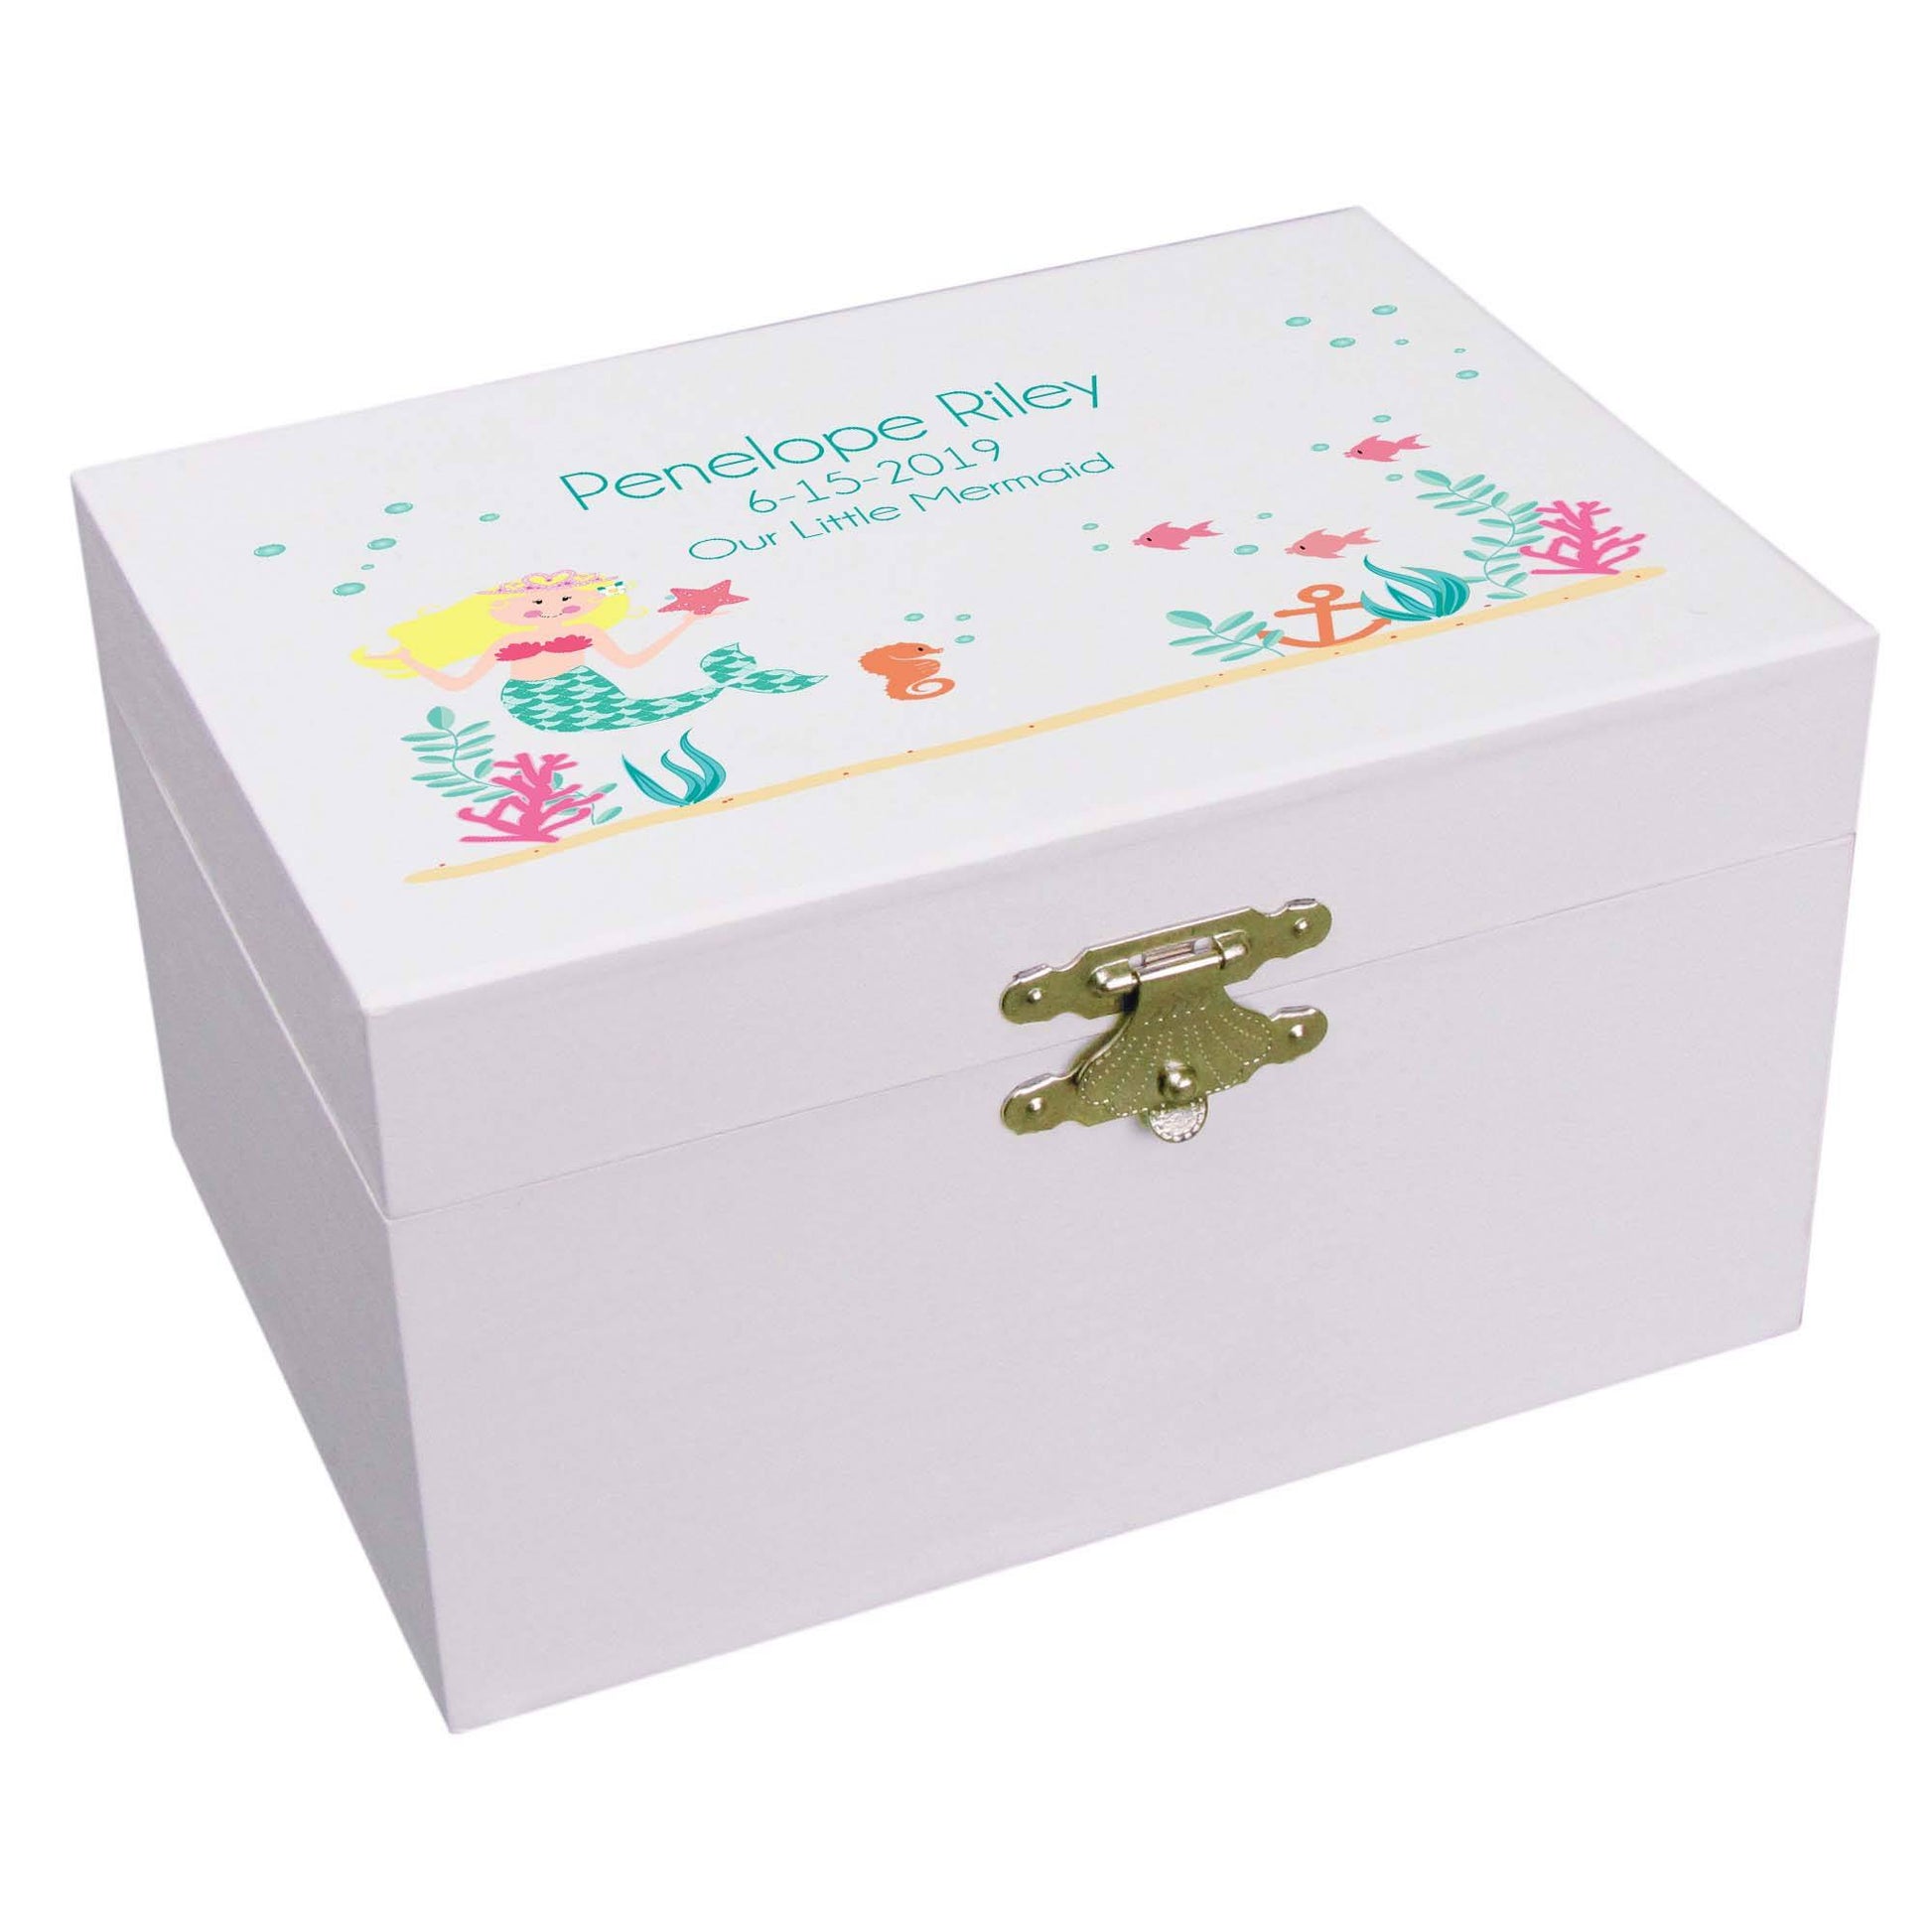 Personalized Ballerina Jewelry Box with Blonde Mermaid Princess design